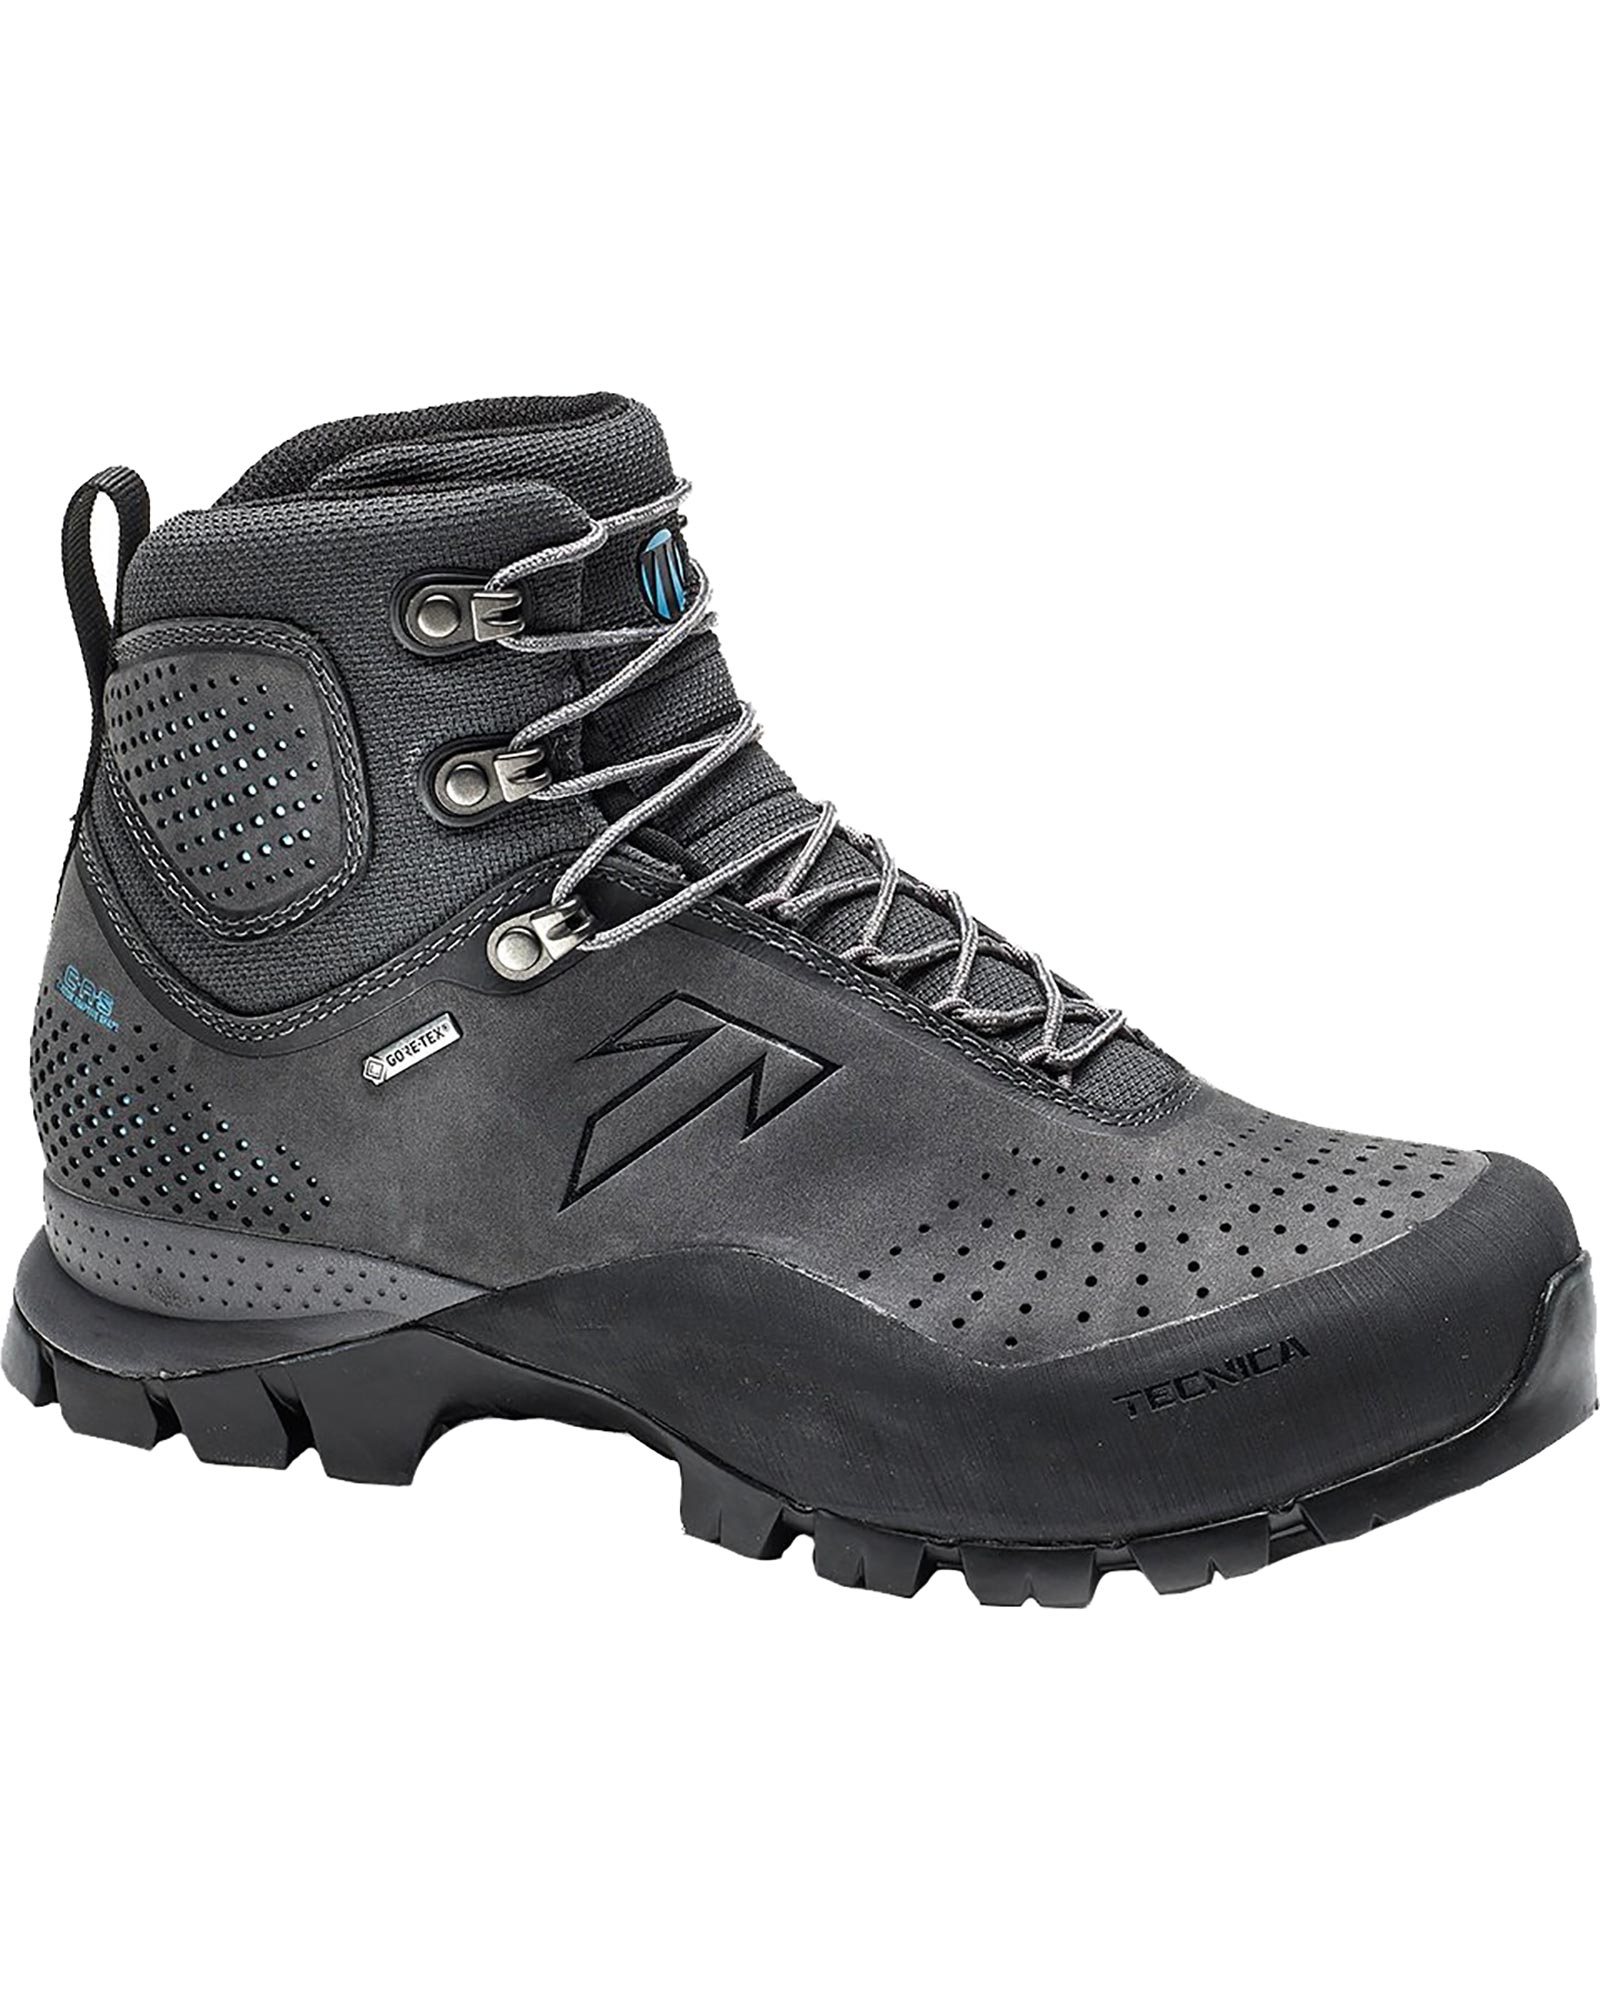 Tecnica Forge GORE TEX Women’s Boots - Asphalt/Blue UK 5